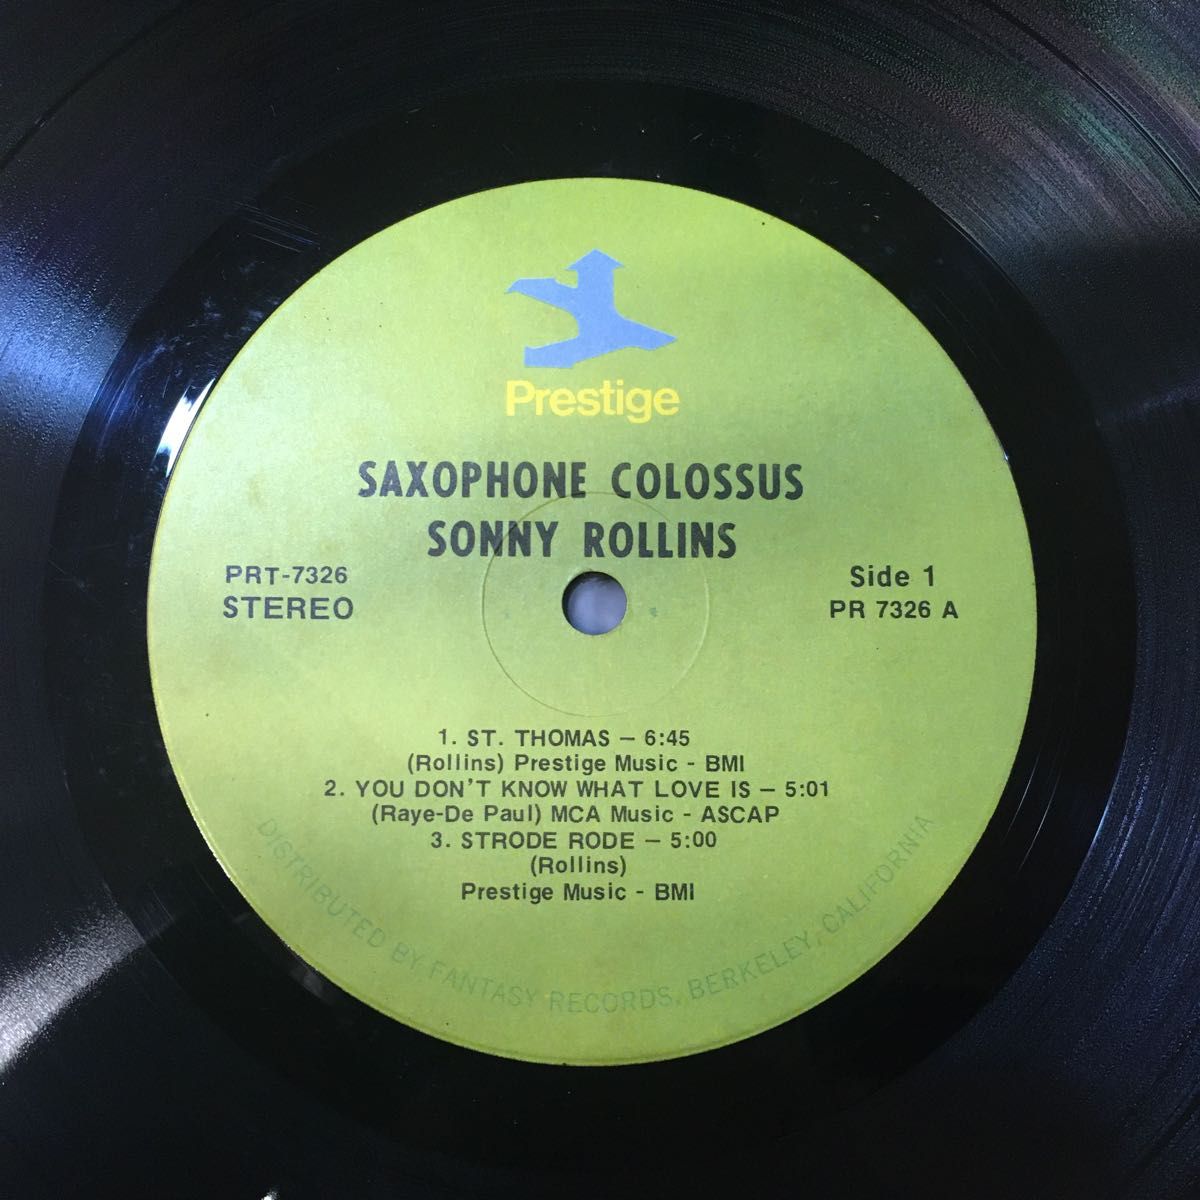 SONNY ROLLINS サキソフォンコロッサス/ソニー・ロリンズ アナログLPレコード US盤